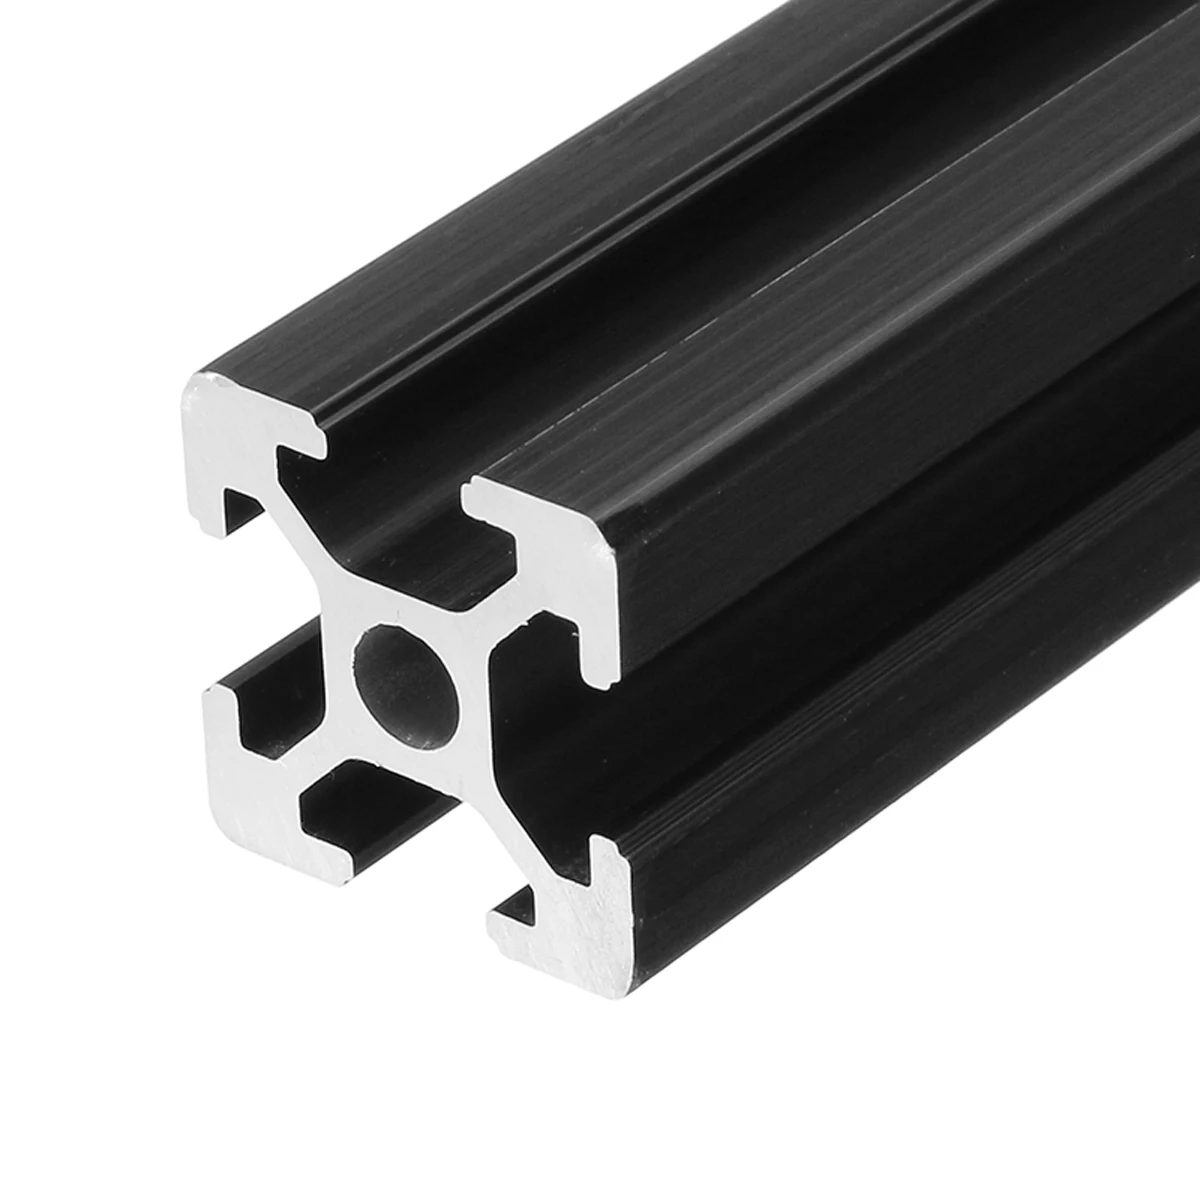 

DANIU 600mm Length Black Anodized 2020 T-Slot Aluminum Profiles Extrusion Frame For CNC